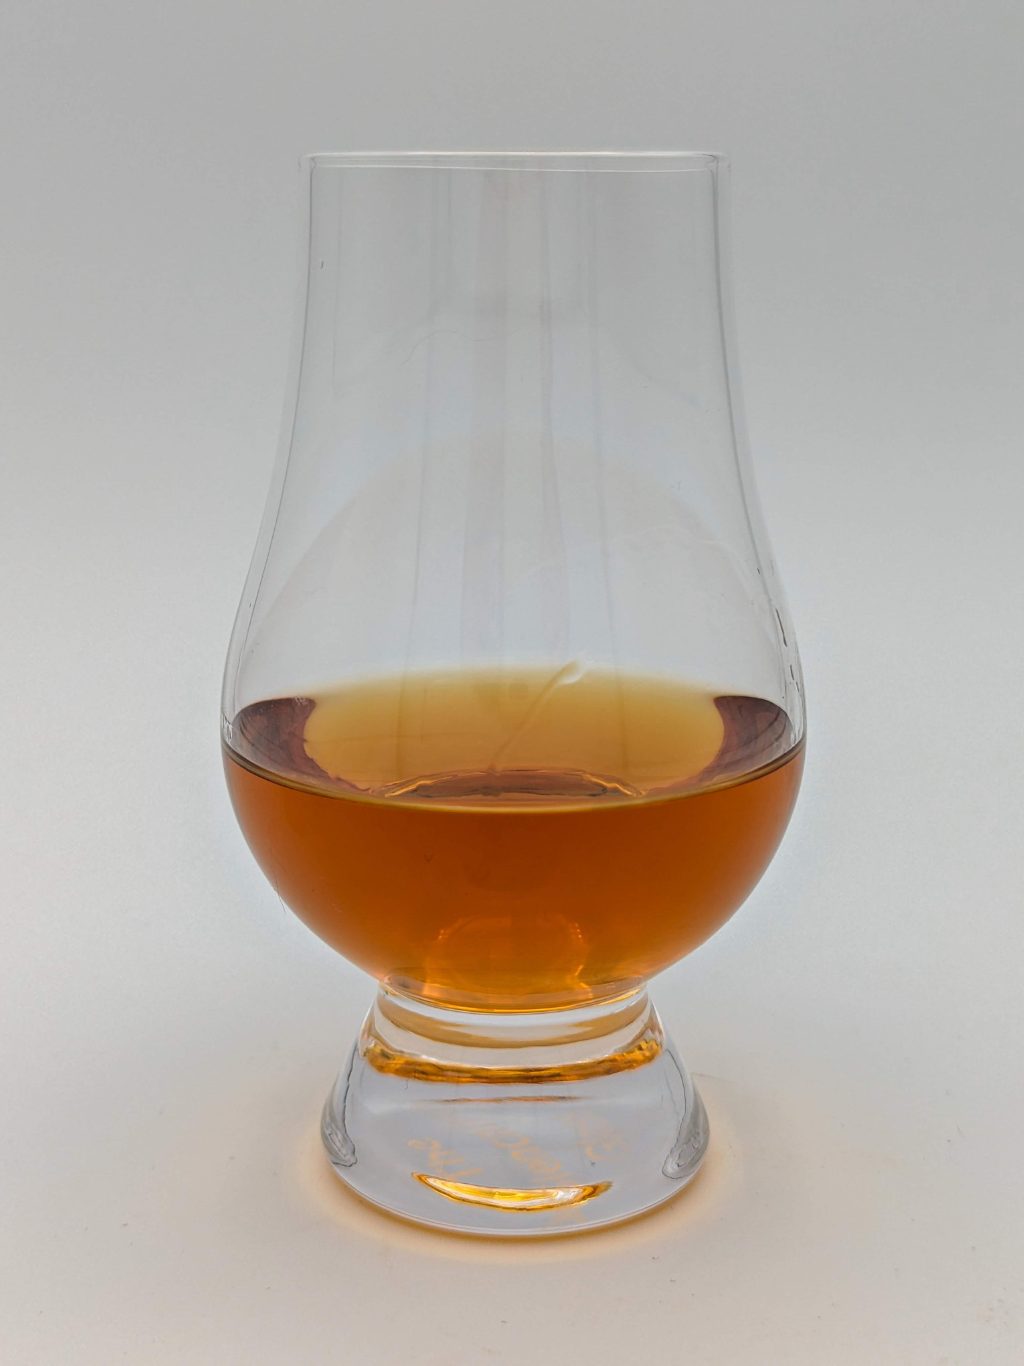 amber liquid in a glencairn glass